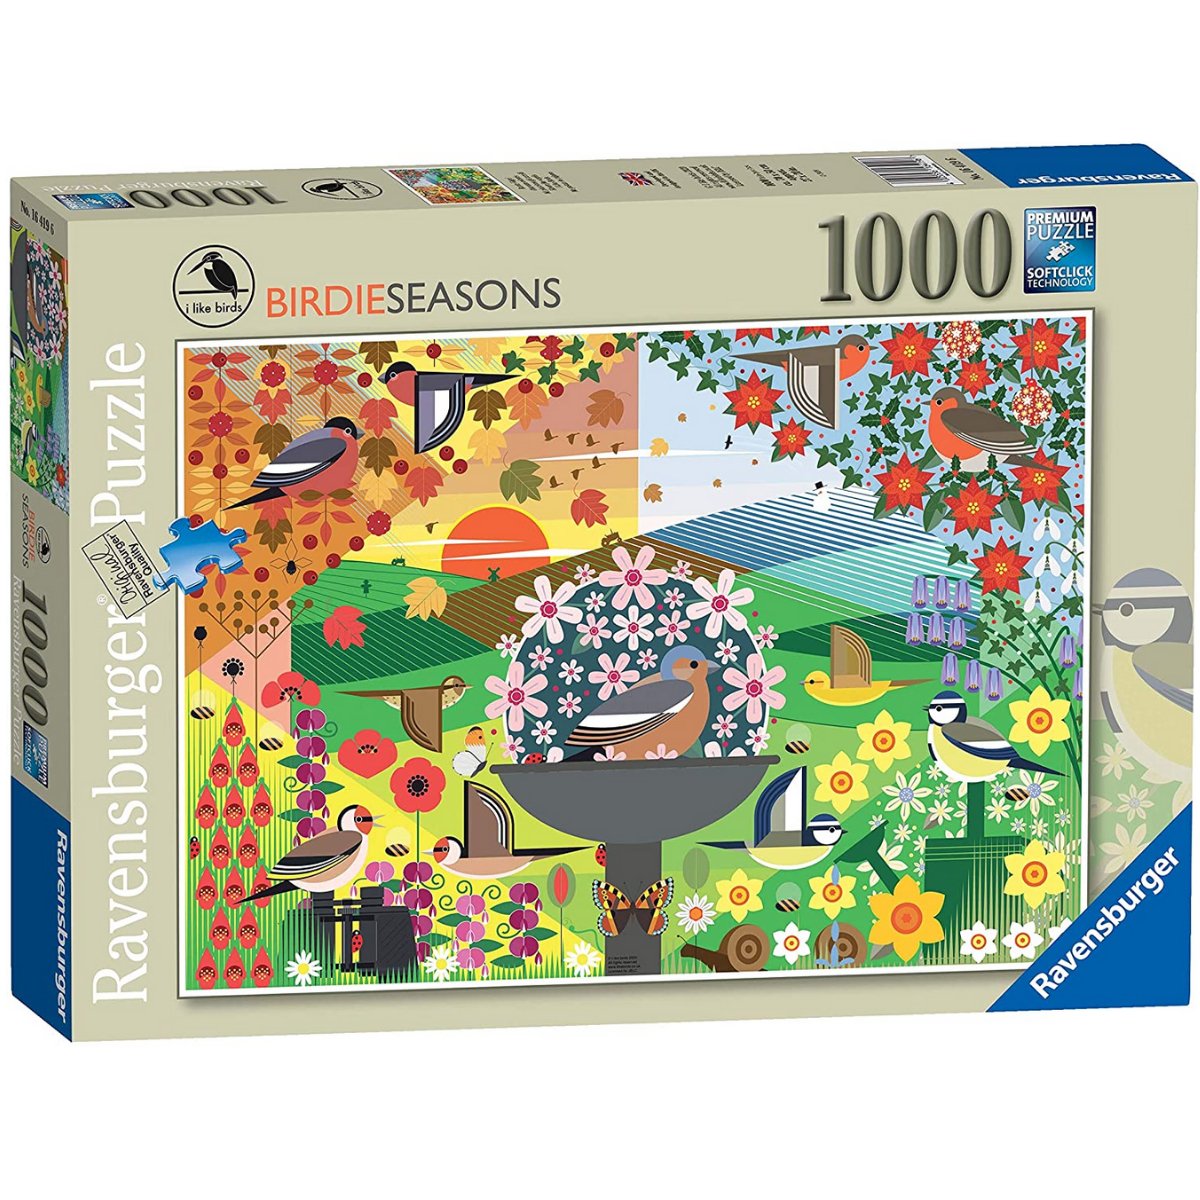 Ravensburger I Like Birds - Birdie Seasons 1000 Piece Jigsaw Puzzle - Phillips Hobbies